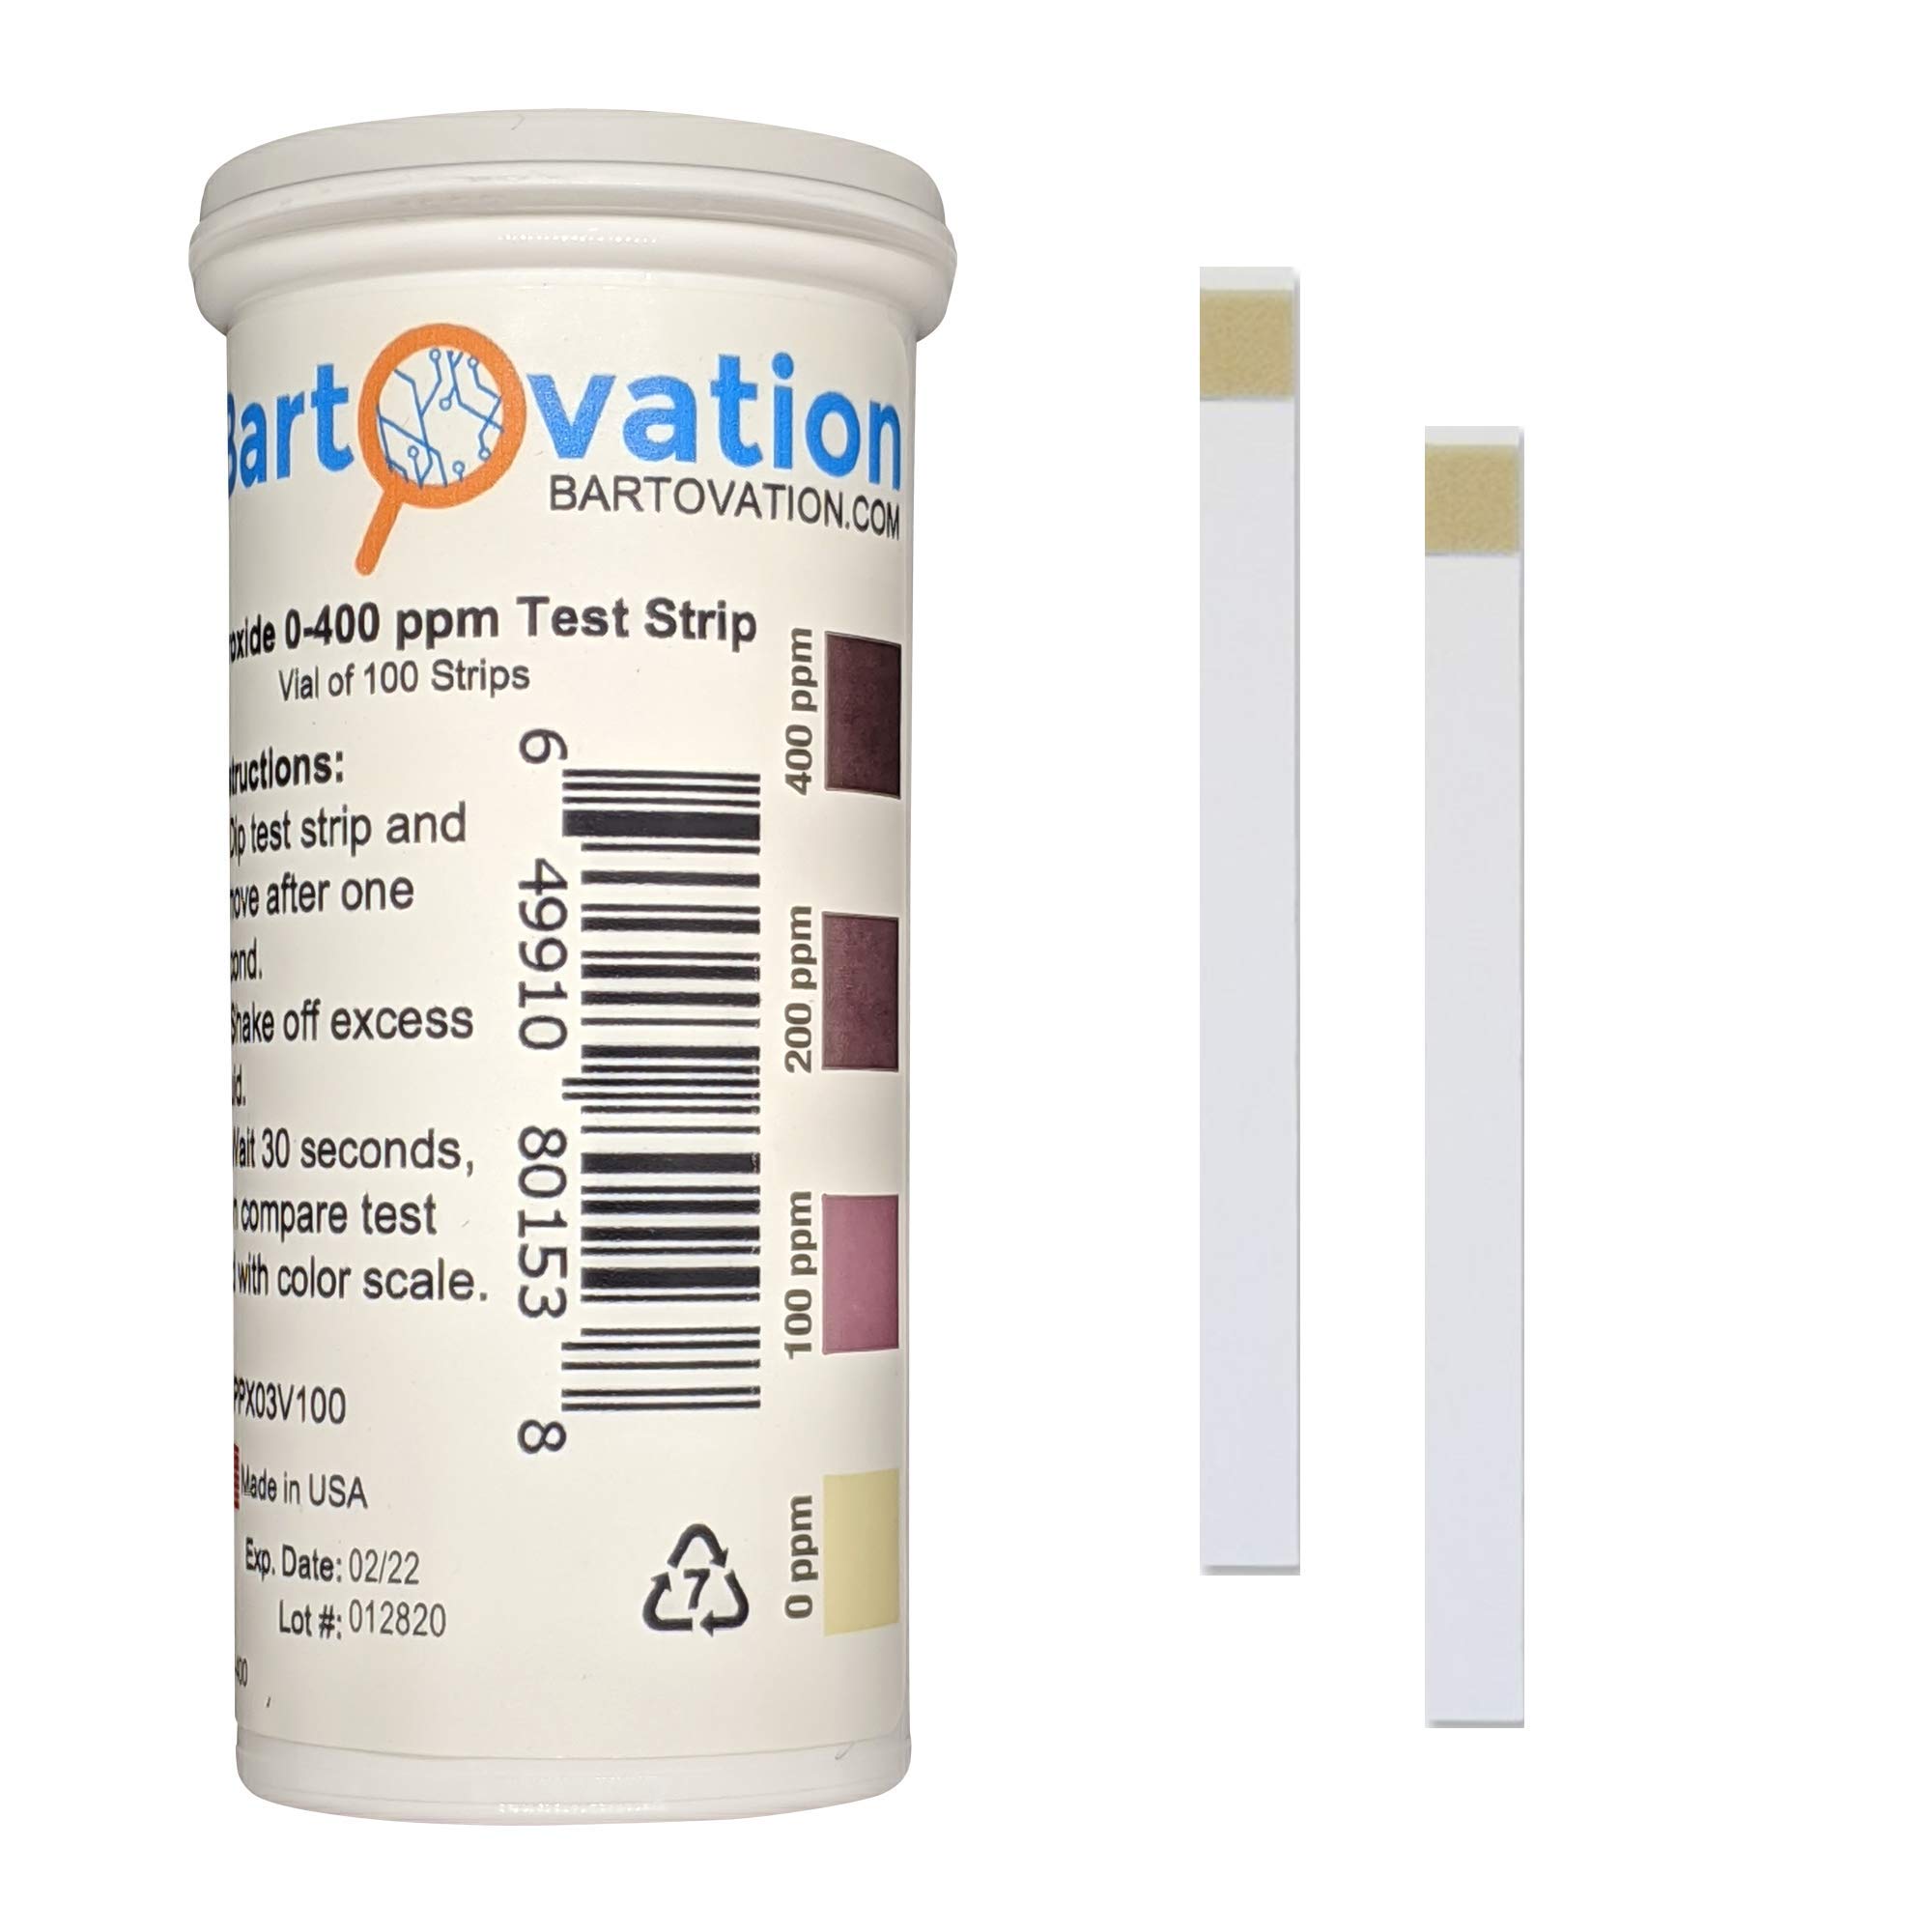 Bartovation Hydrogen Peroxide H2O2 Test Strips, 0-400 Ppm Vial Of 100 Strips]